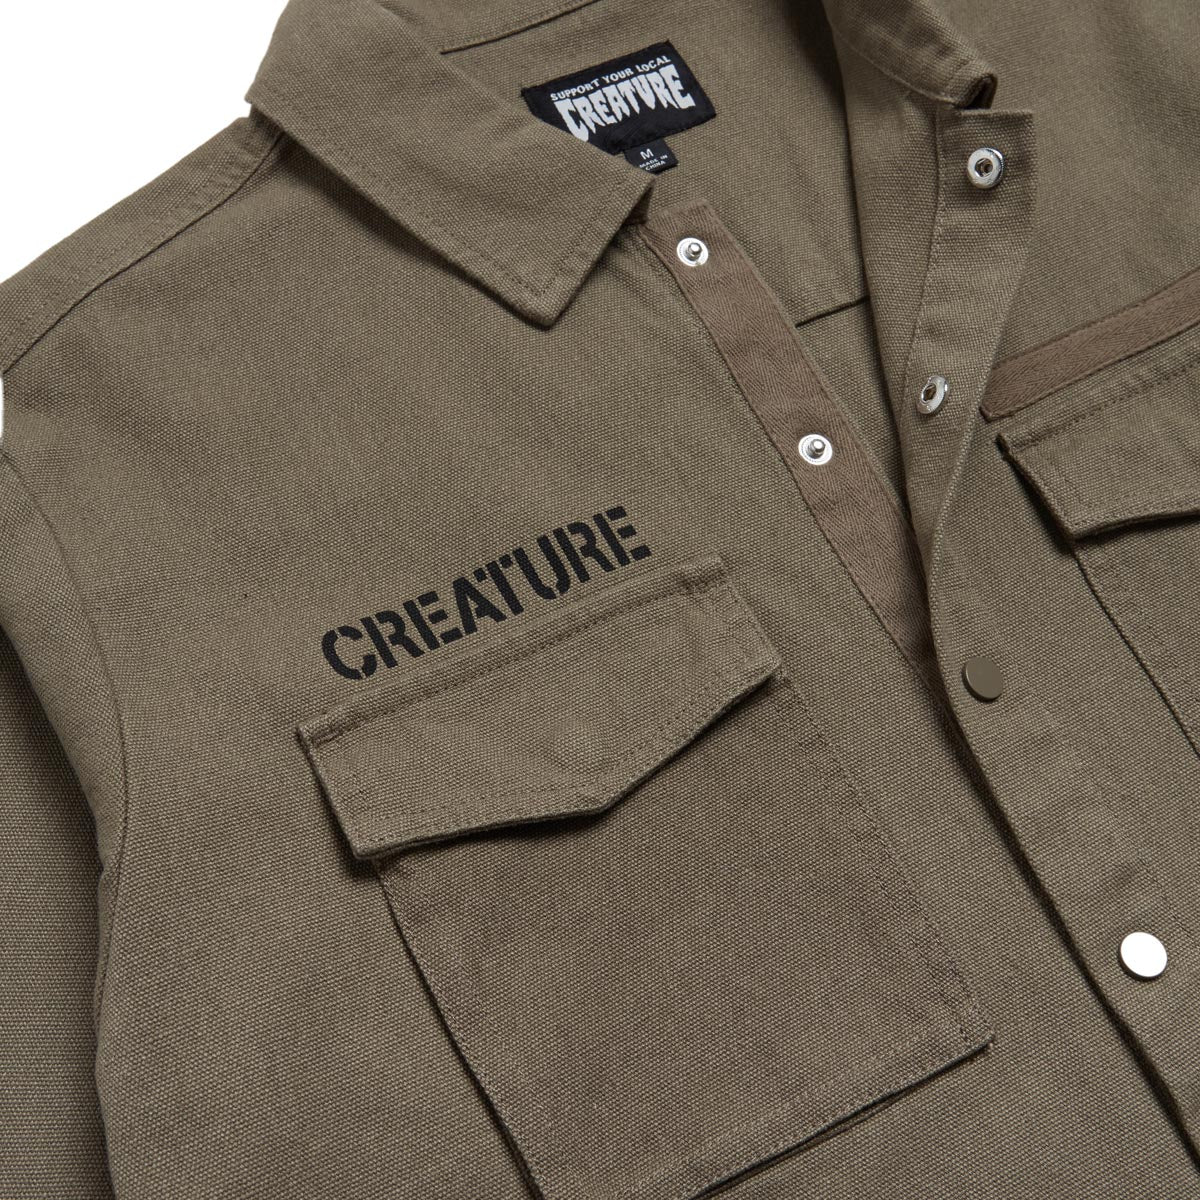 Creature Recruiter Lightweight Jacket - Army image 4